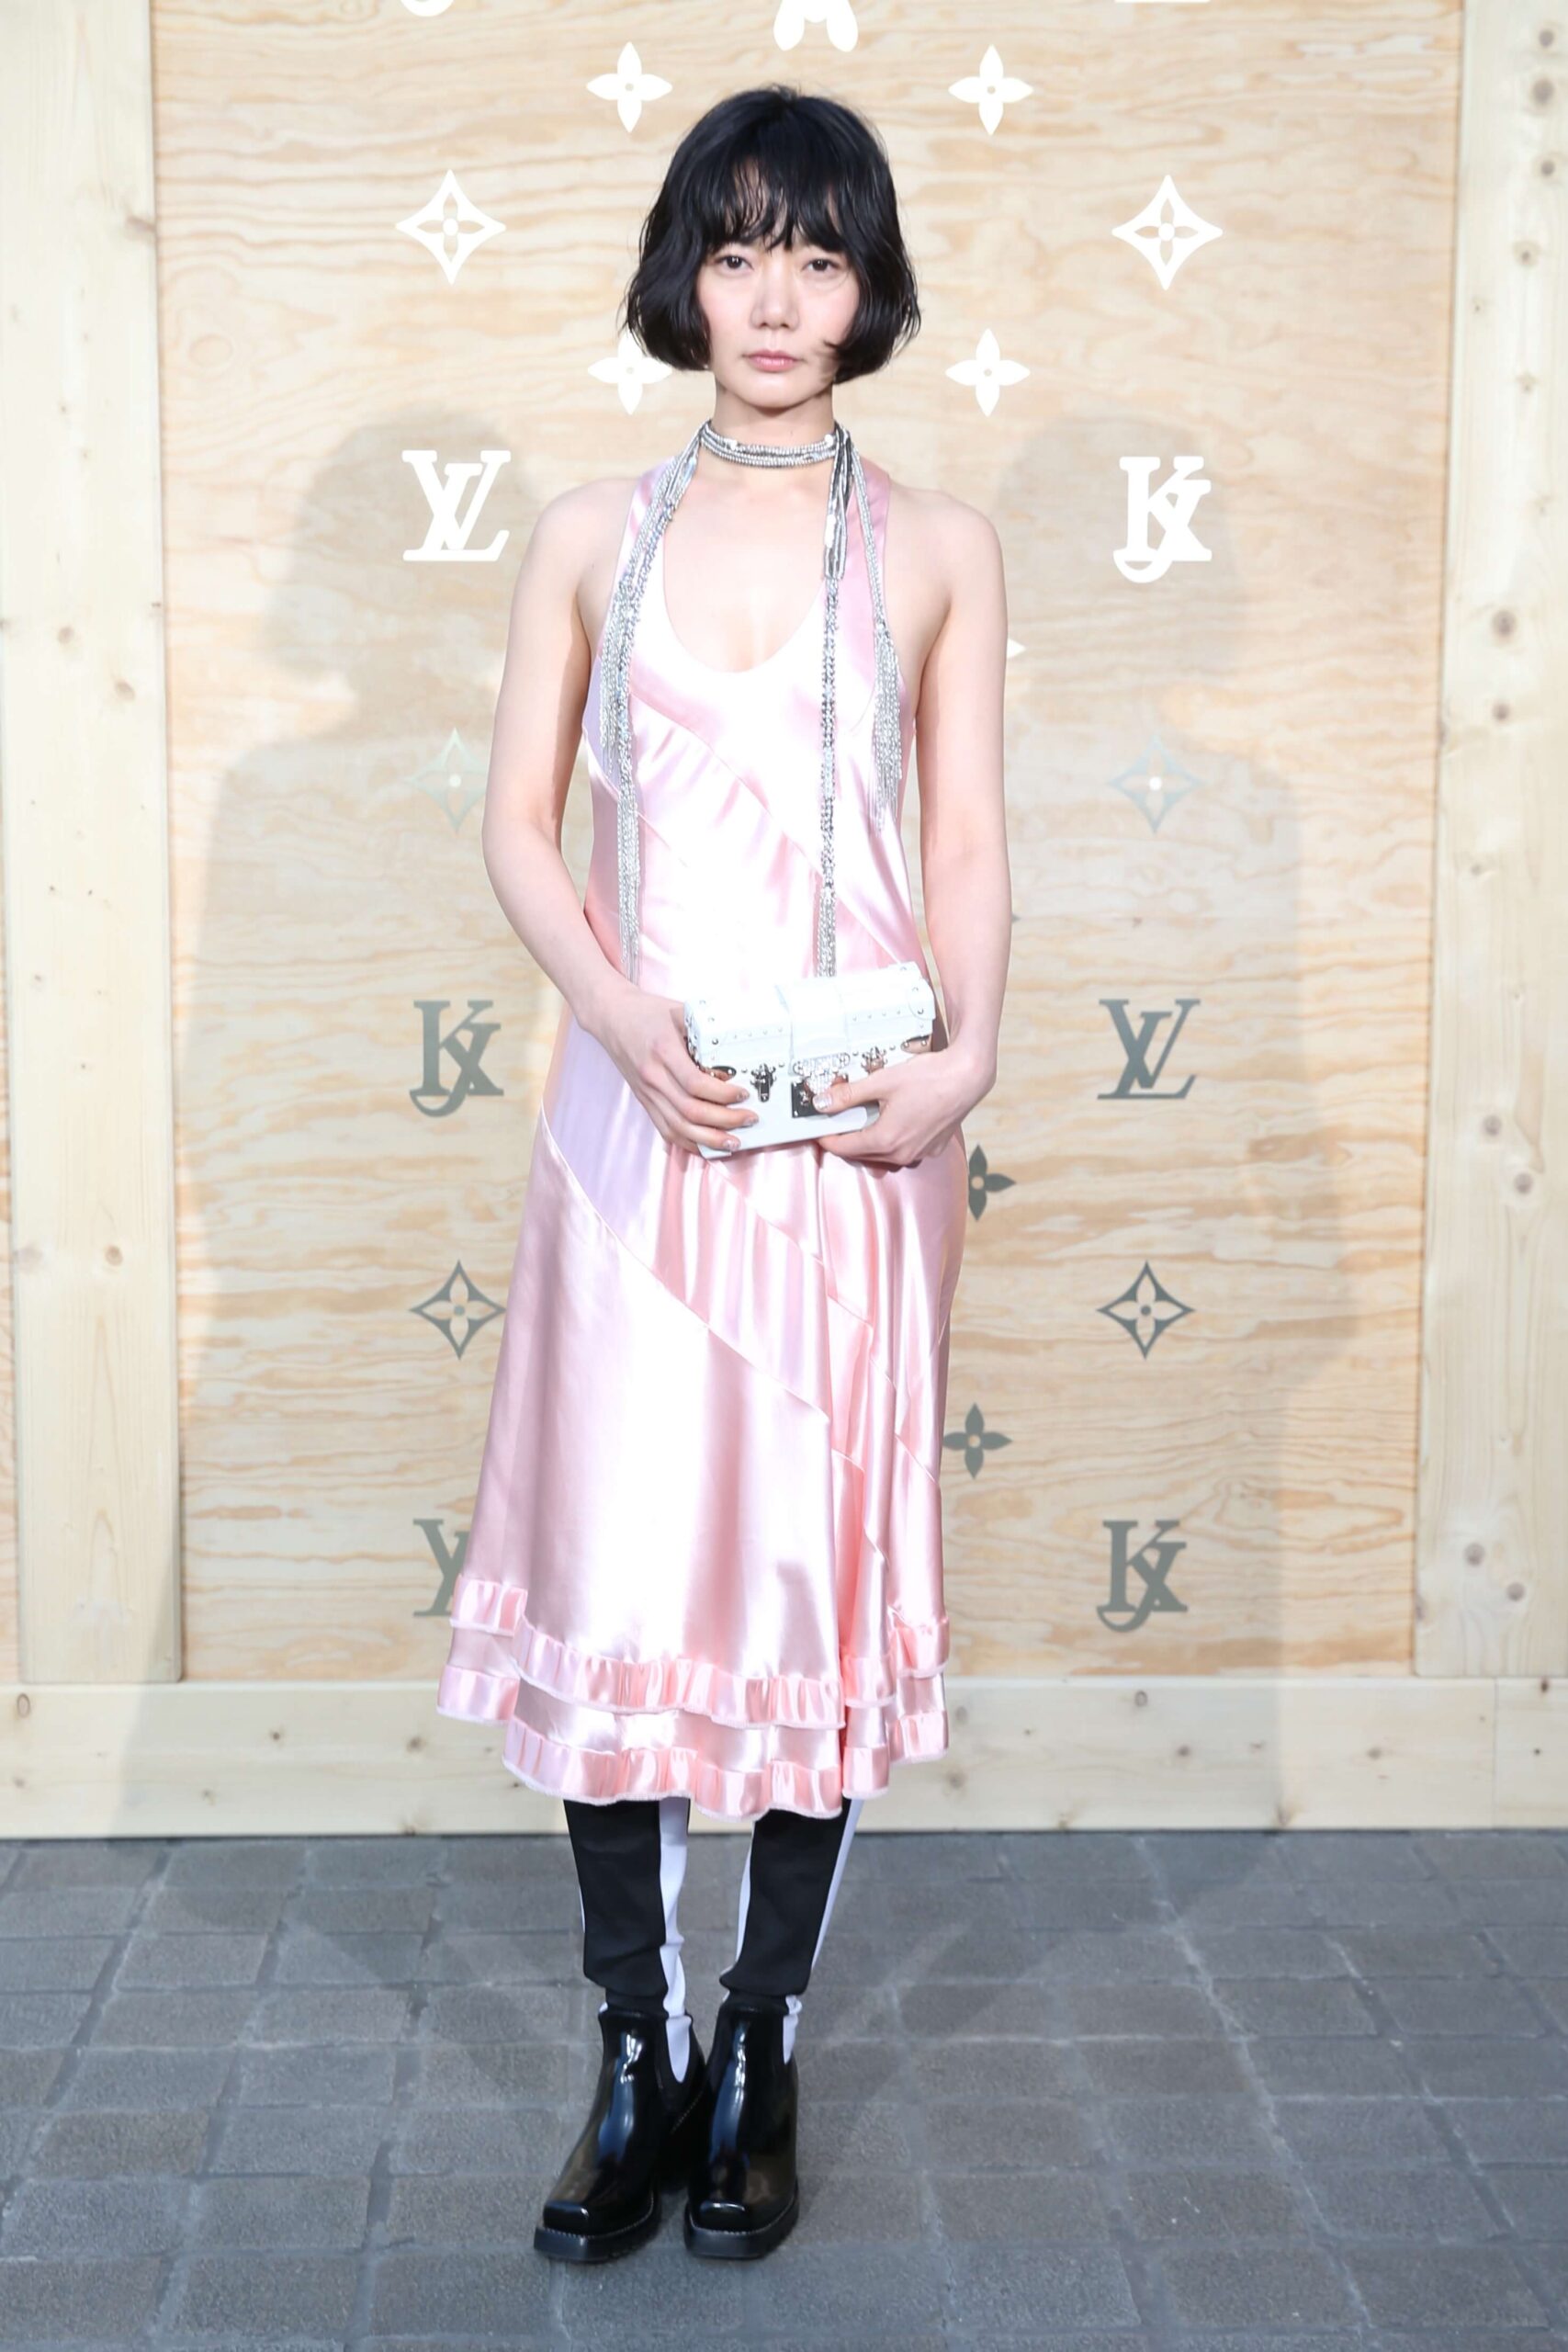 Louis Vuitton X Jeff Koons: See what Cate Blanchett, Jennifer